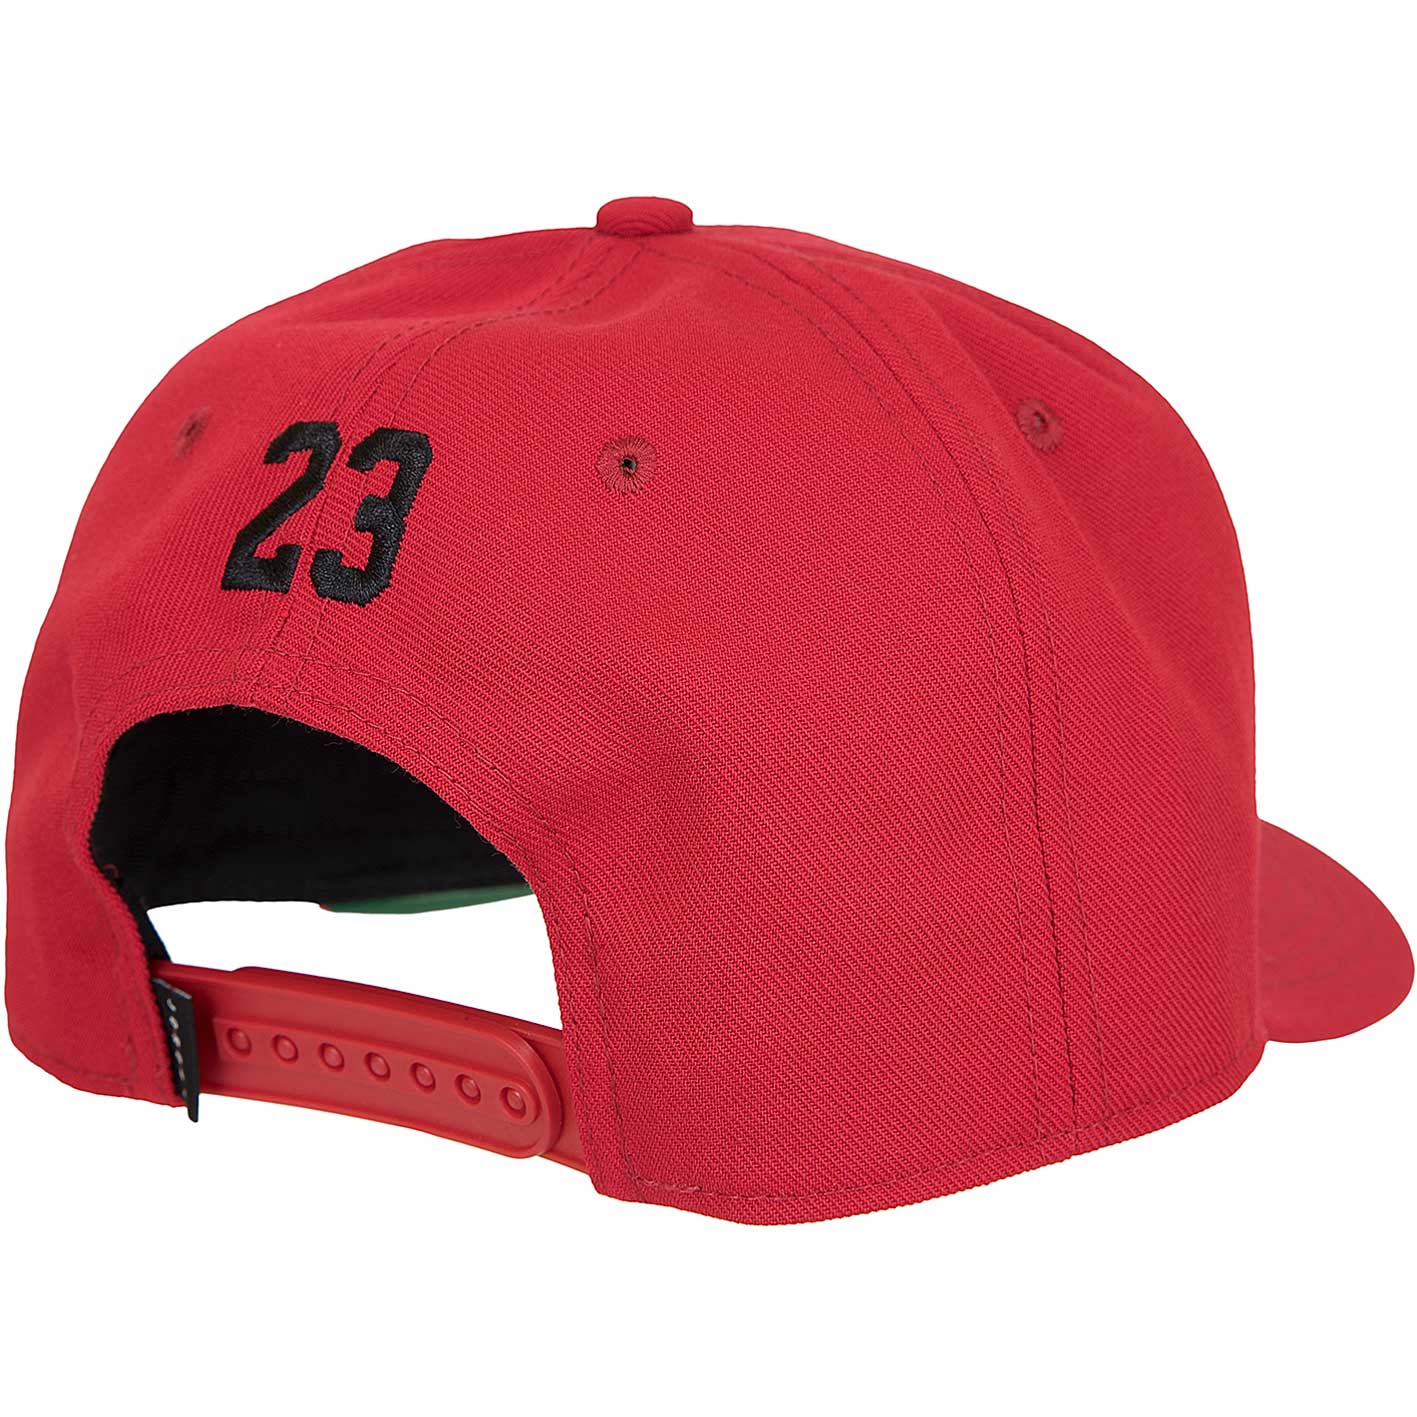 ☆ Nike Snapback Cap Jordan Jumpman Classic99 rot/schwarz - hier bestellen!